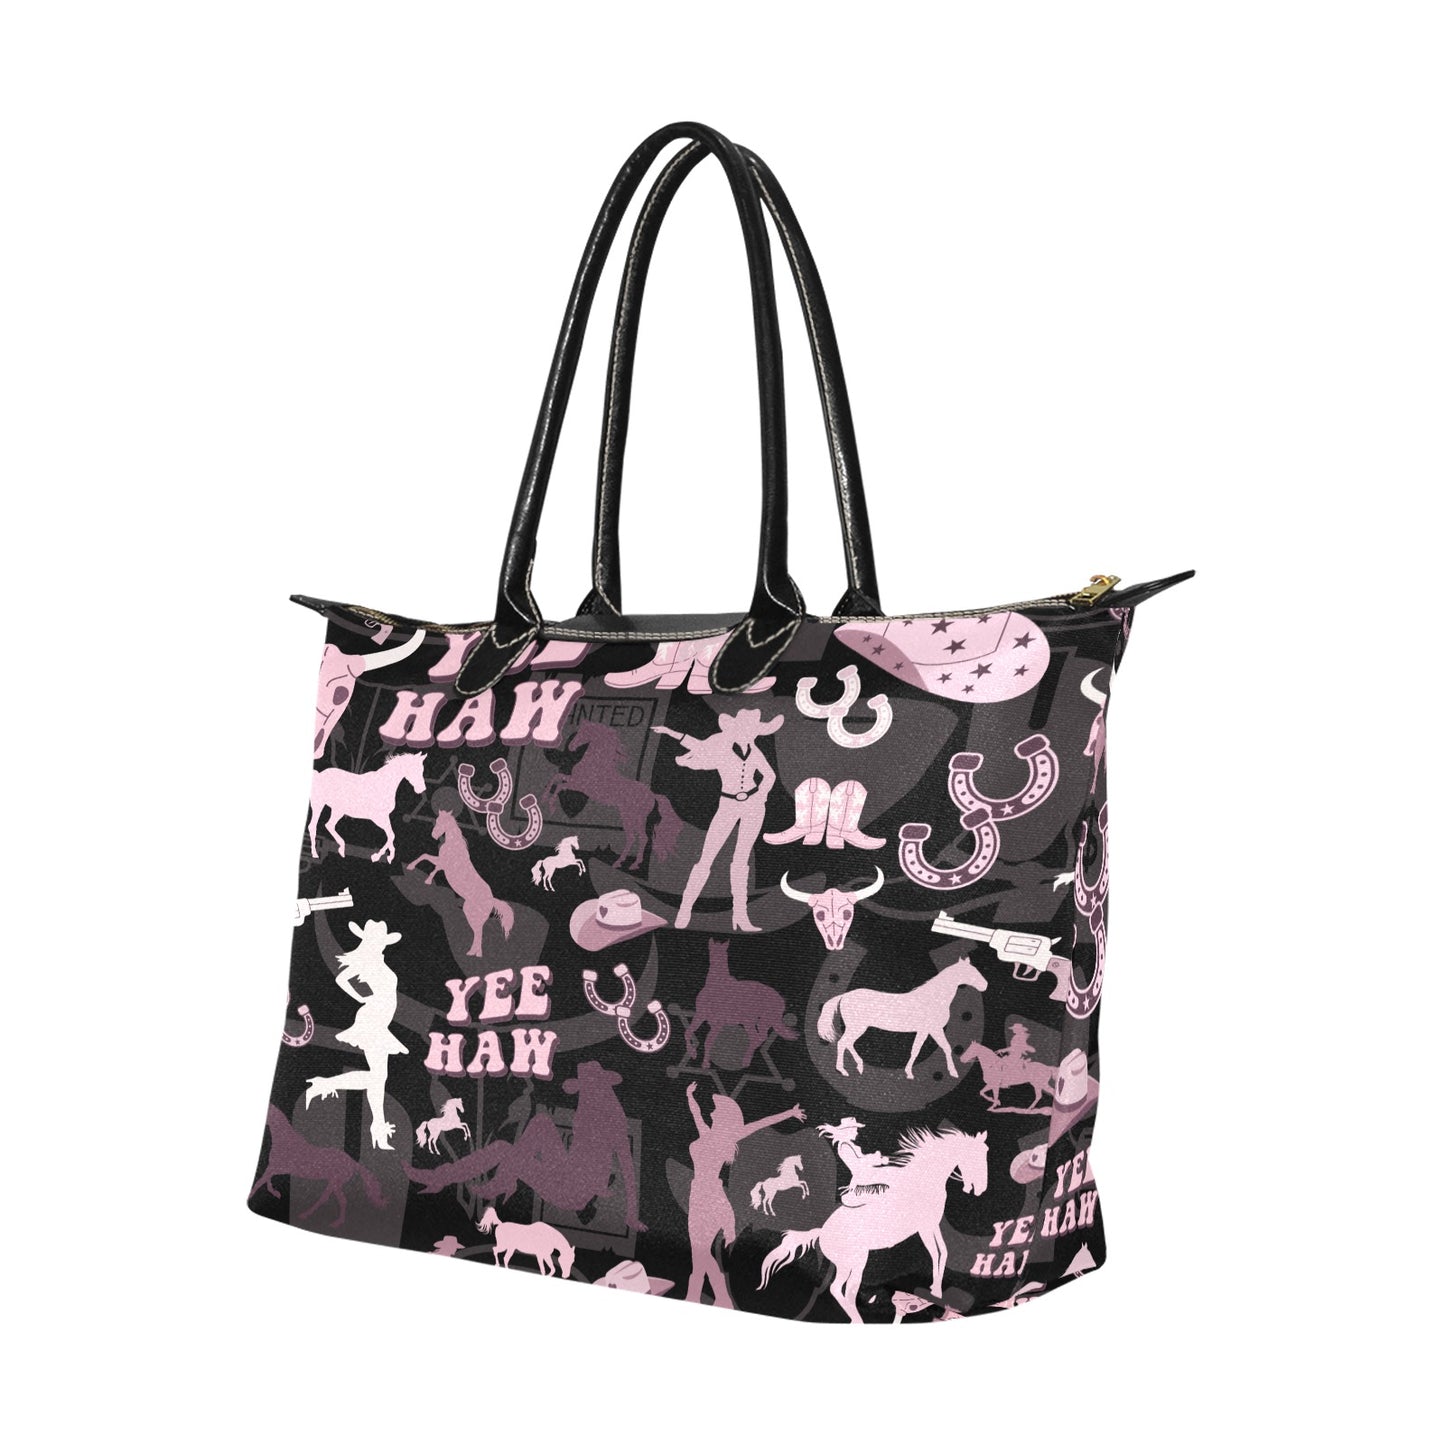 Cowgirl motif tote bag Shoulder Handbag Tote bag